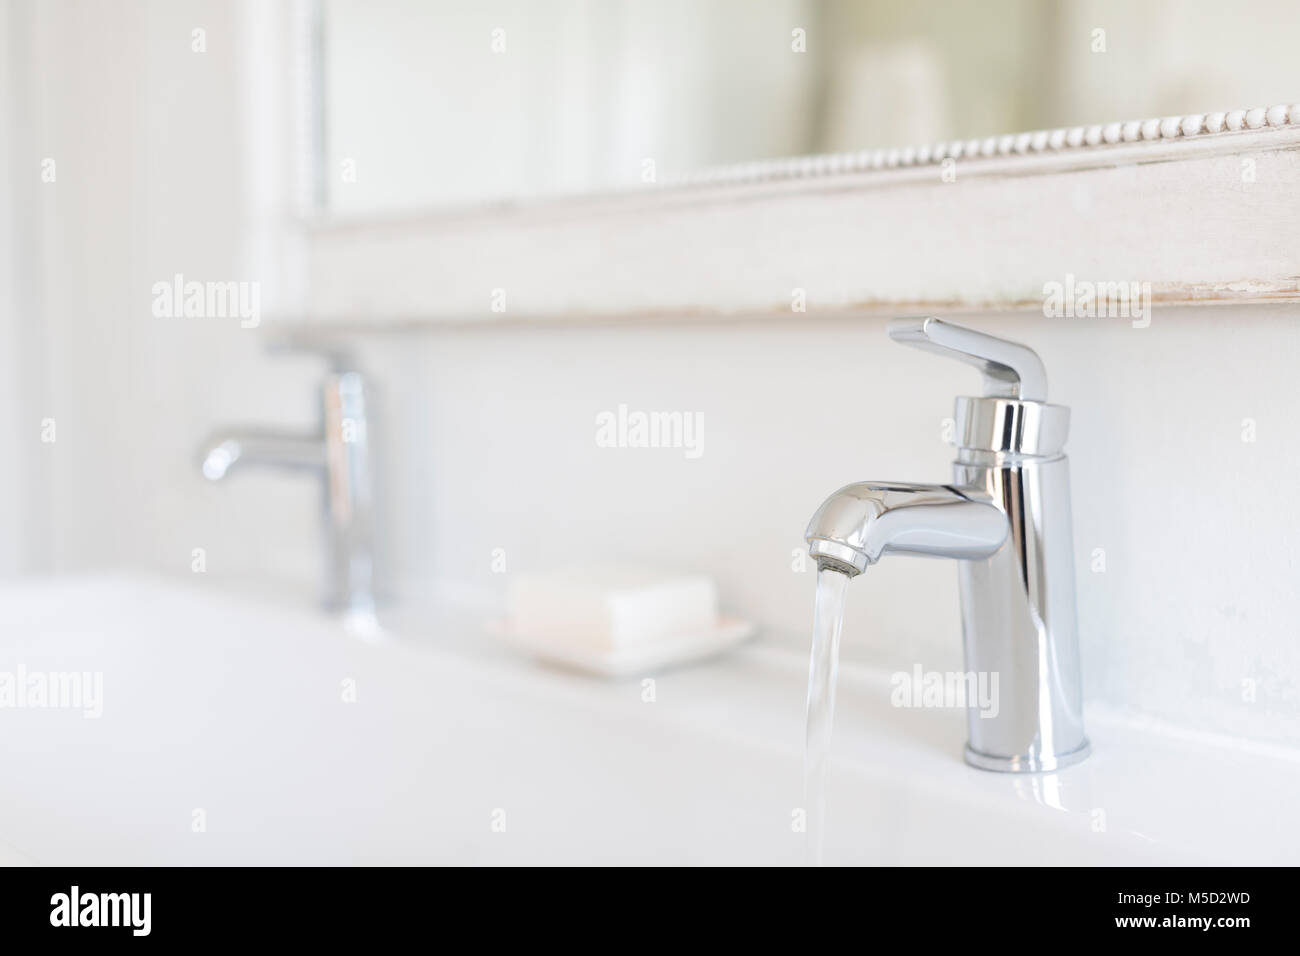 Luxury, modern stainless steel bathroom faucet Stock Photo